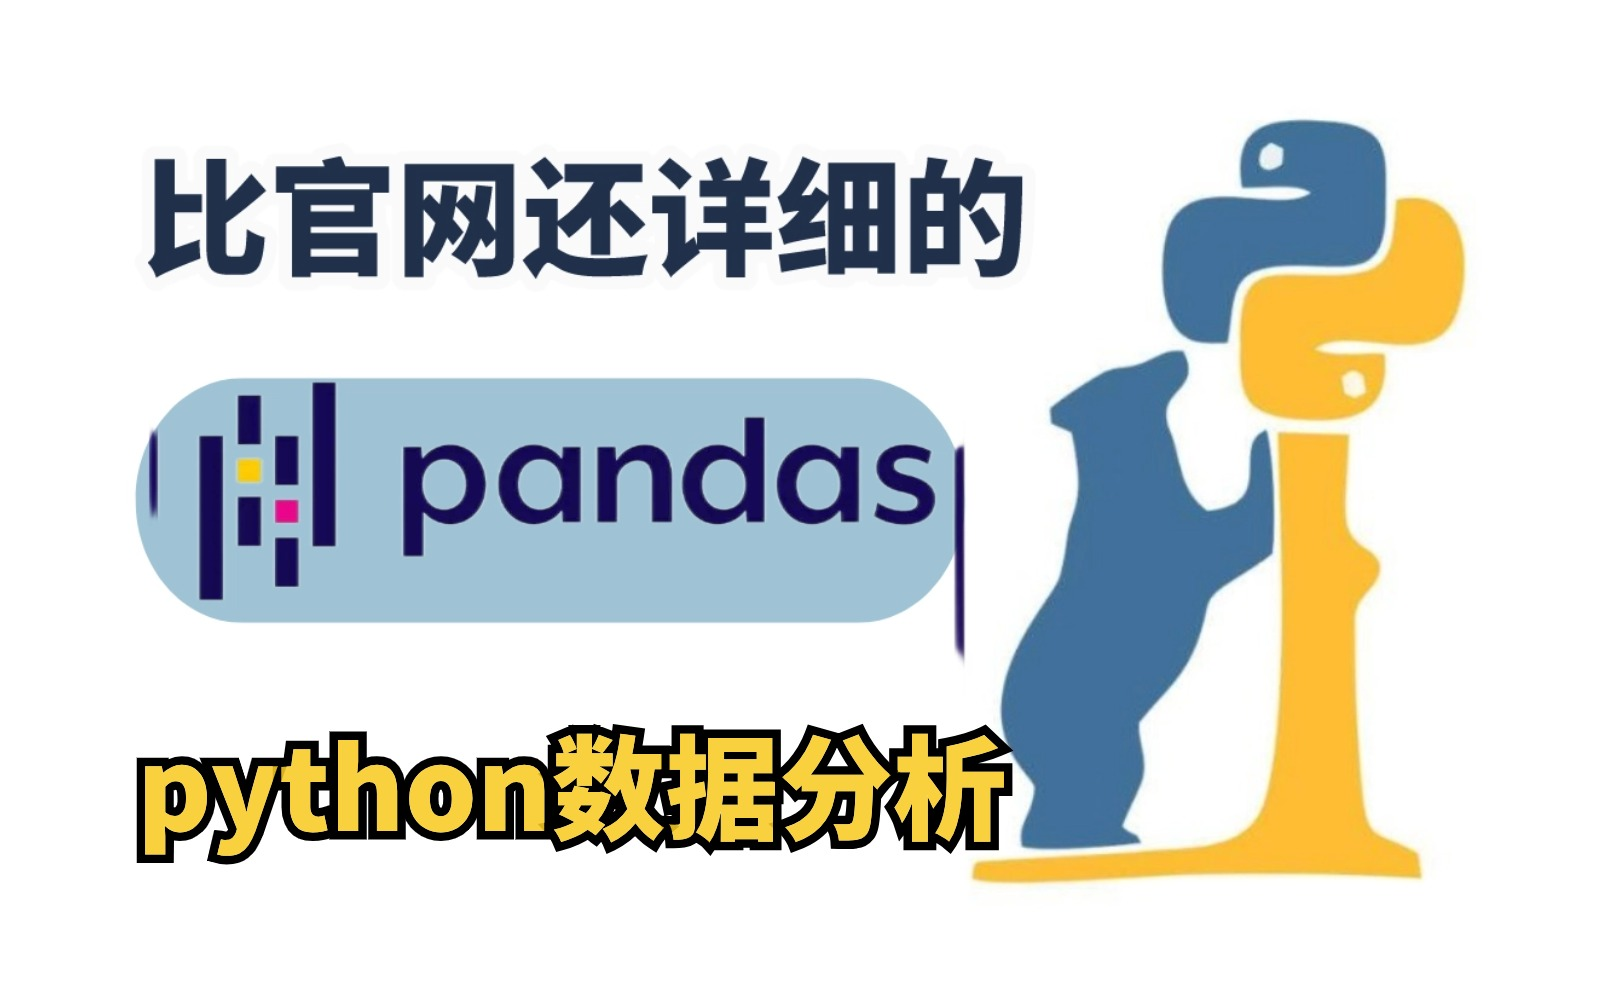 【Pandas教程】B站最详细pandas数据分析教程！闭着眼都能学会的python数据分析——pandas从入门到实战超全教程！